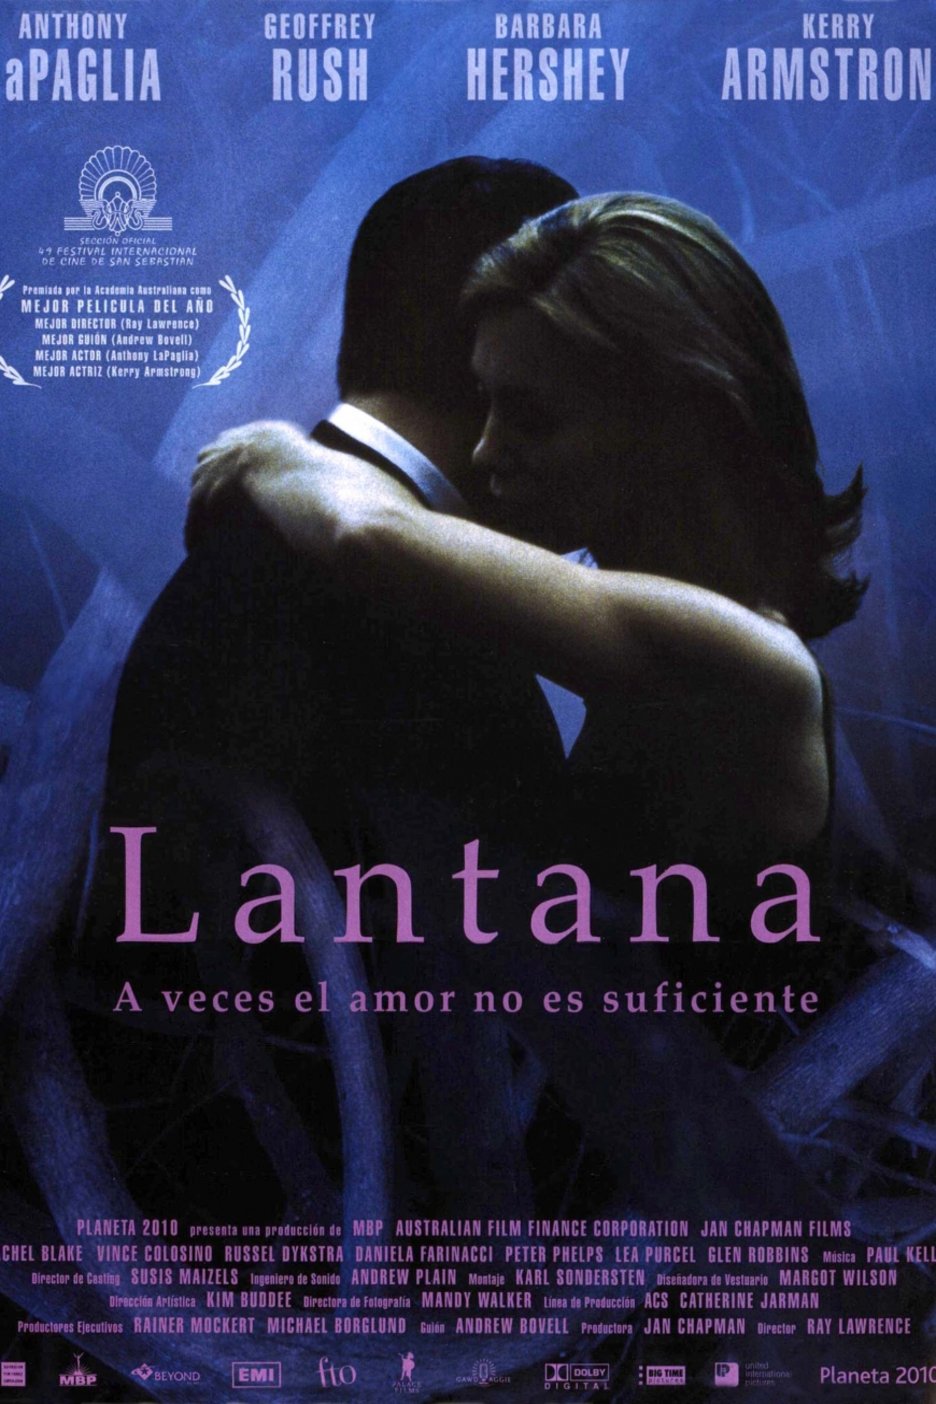 L'affiche du film Lantana